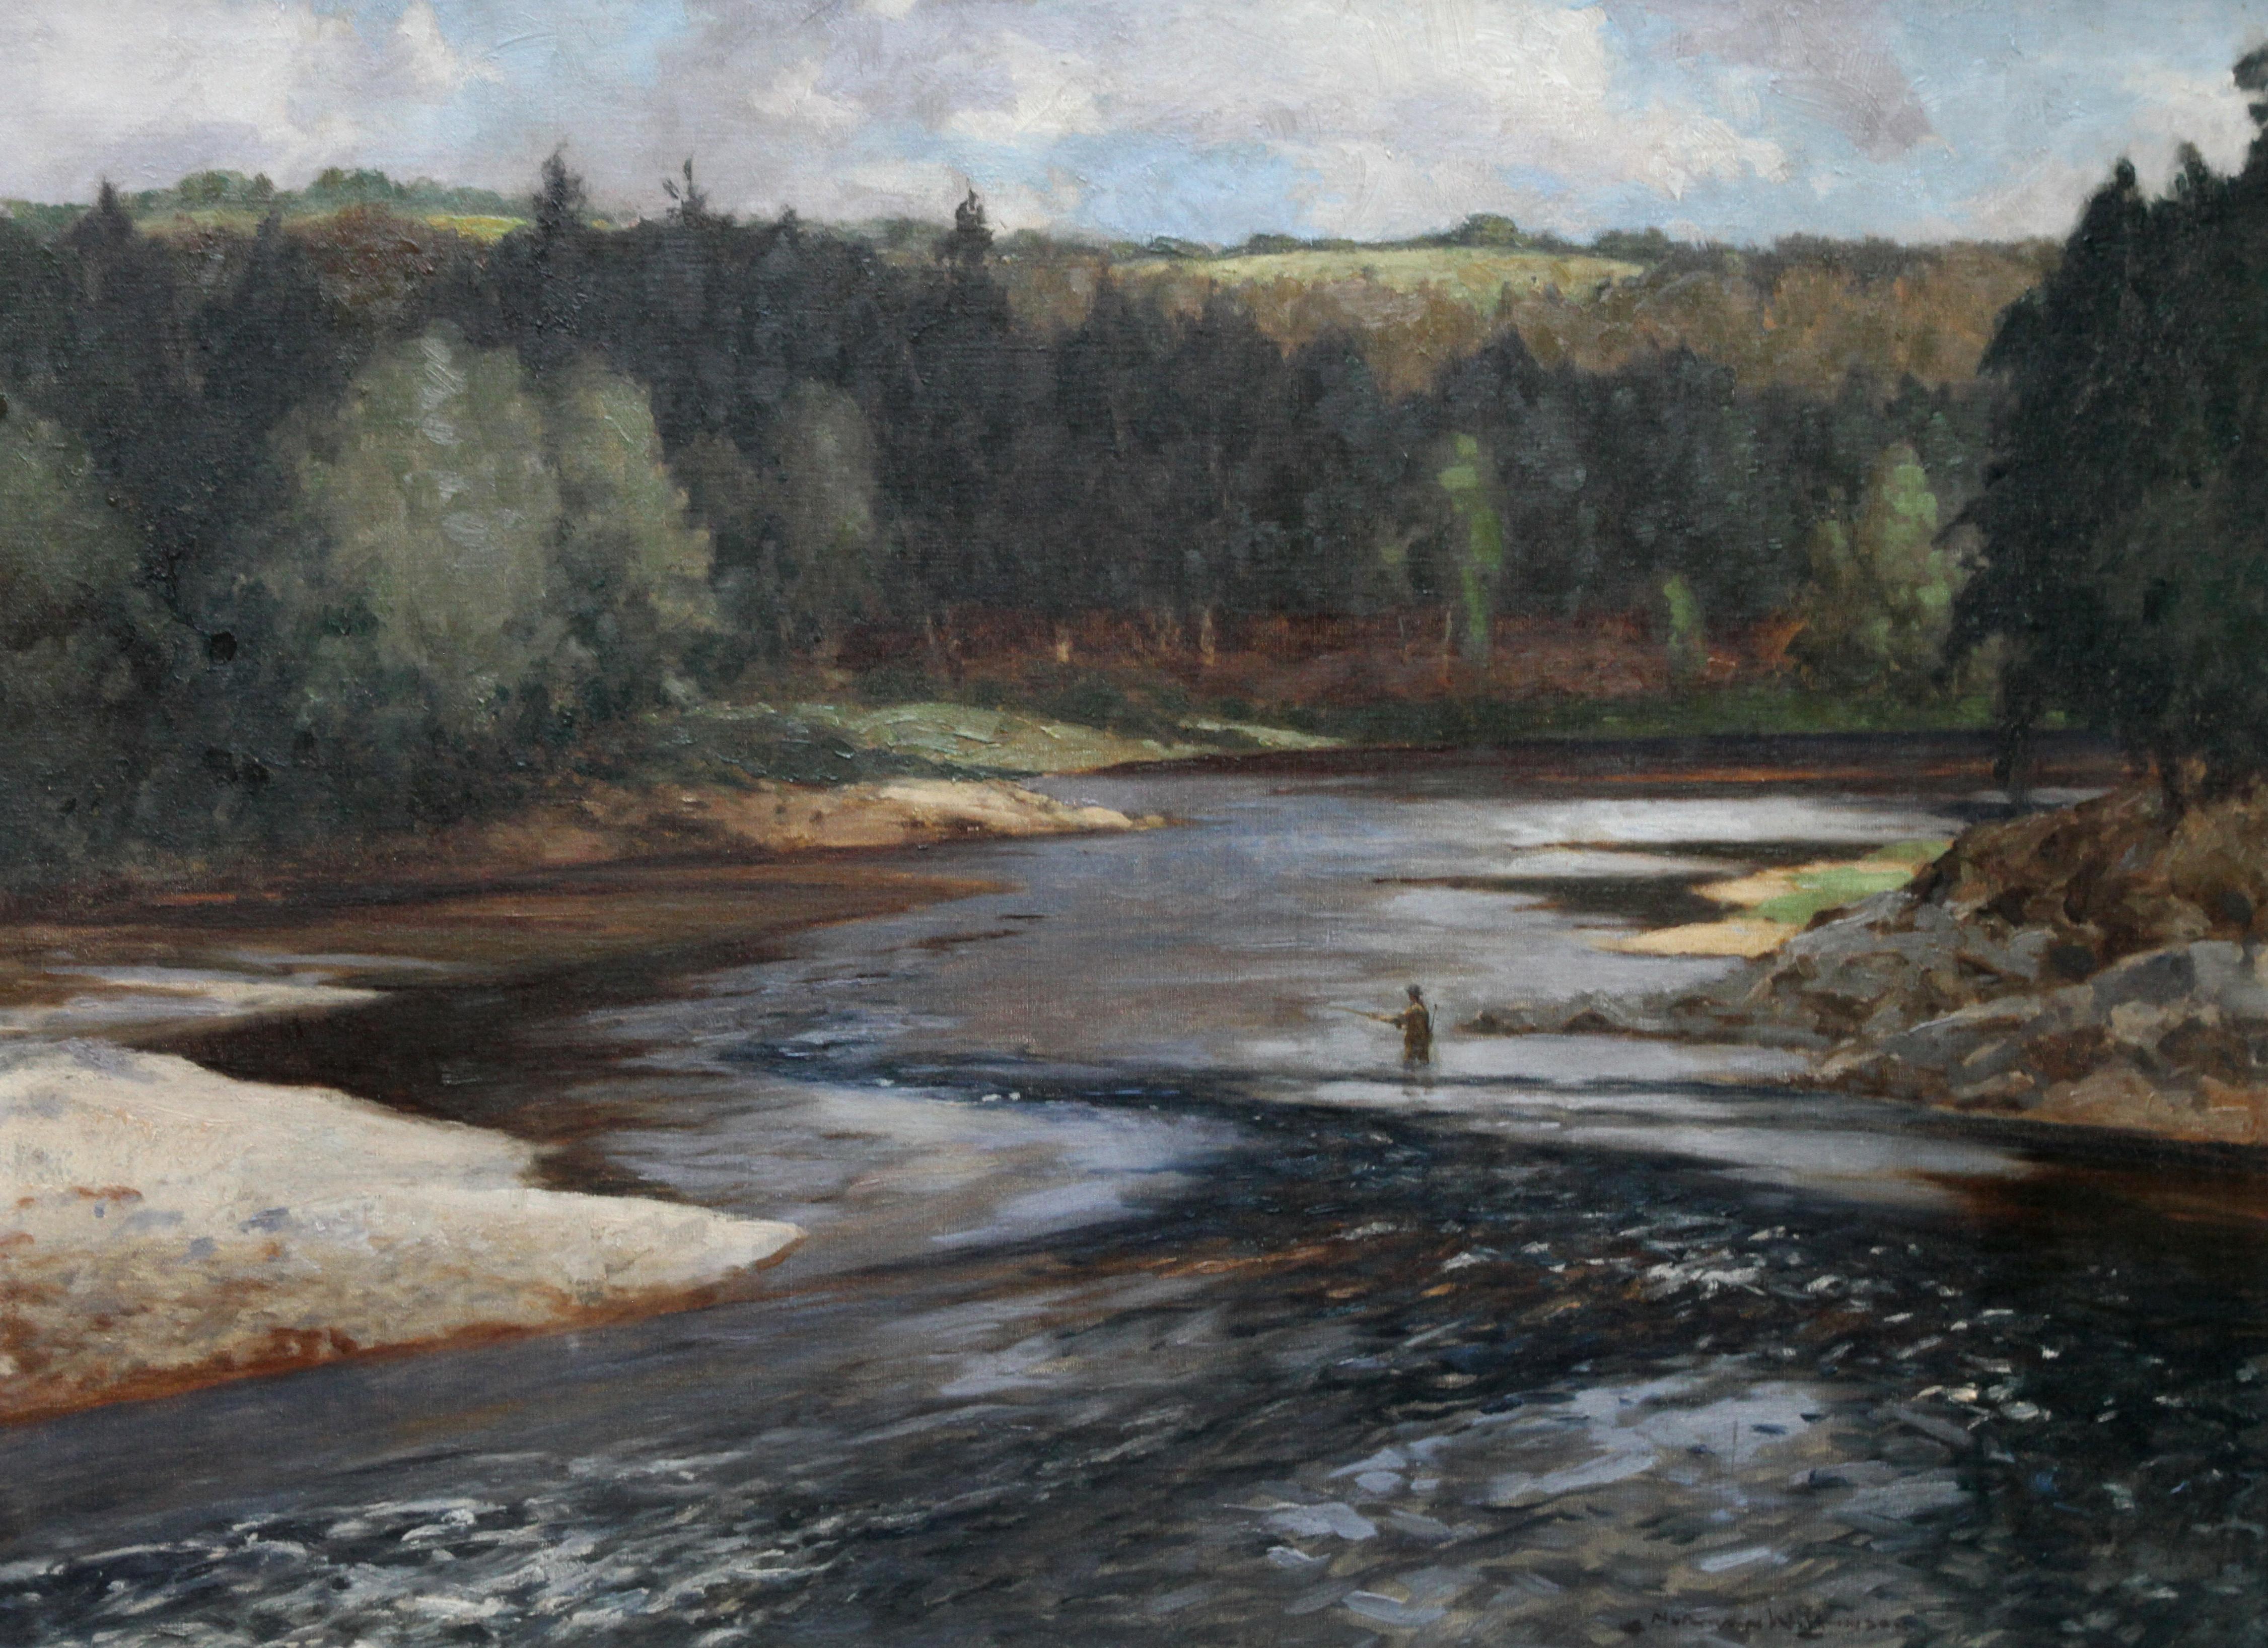 Fisherman on the Upper Spey - British art Scottish river landscape oil painting 1